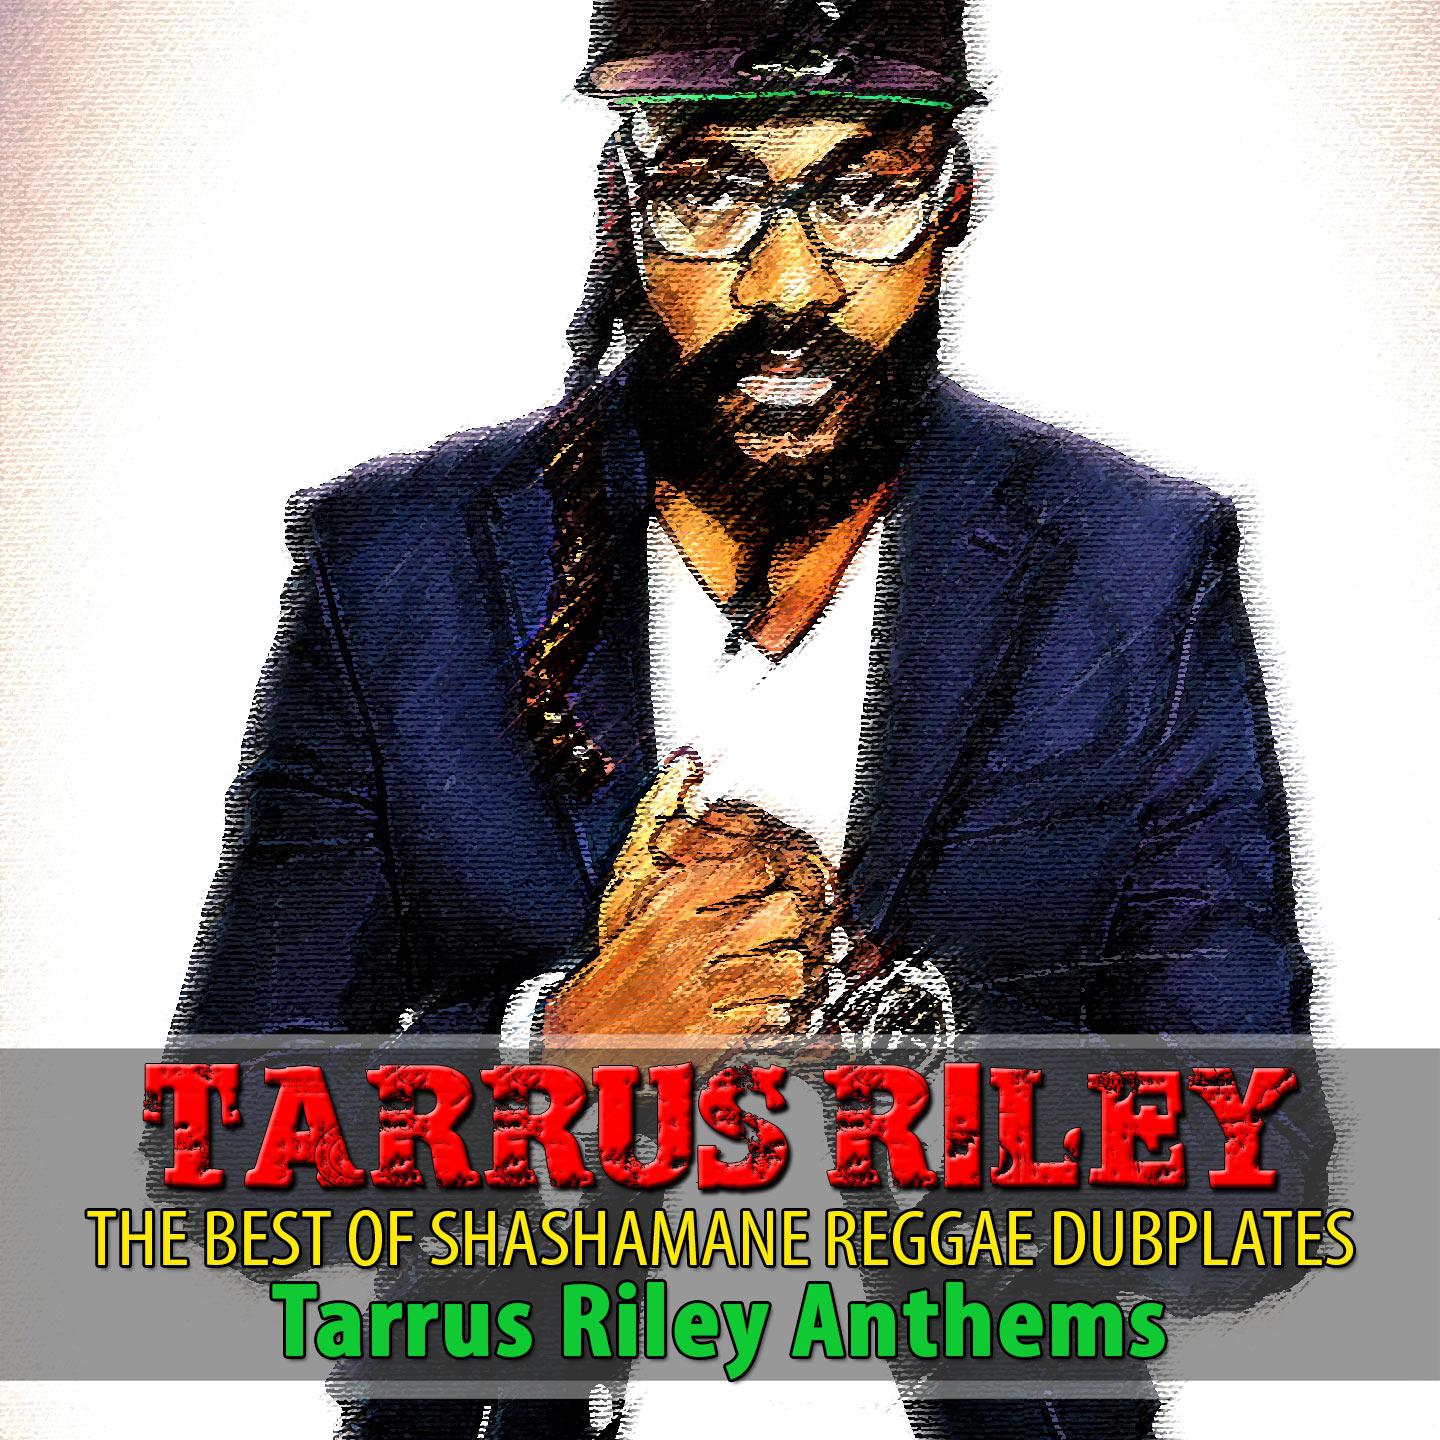 The Best of Shashamane Reggae Dubplates (Tarrus Riley Anthems)